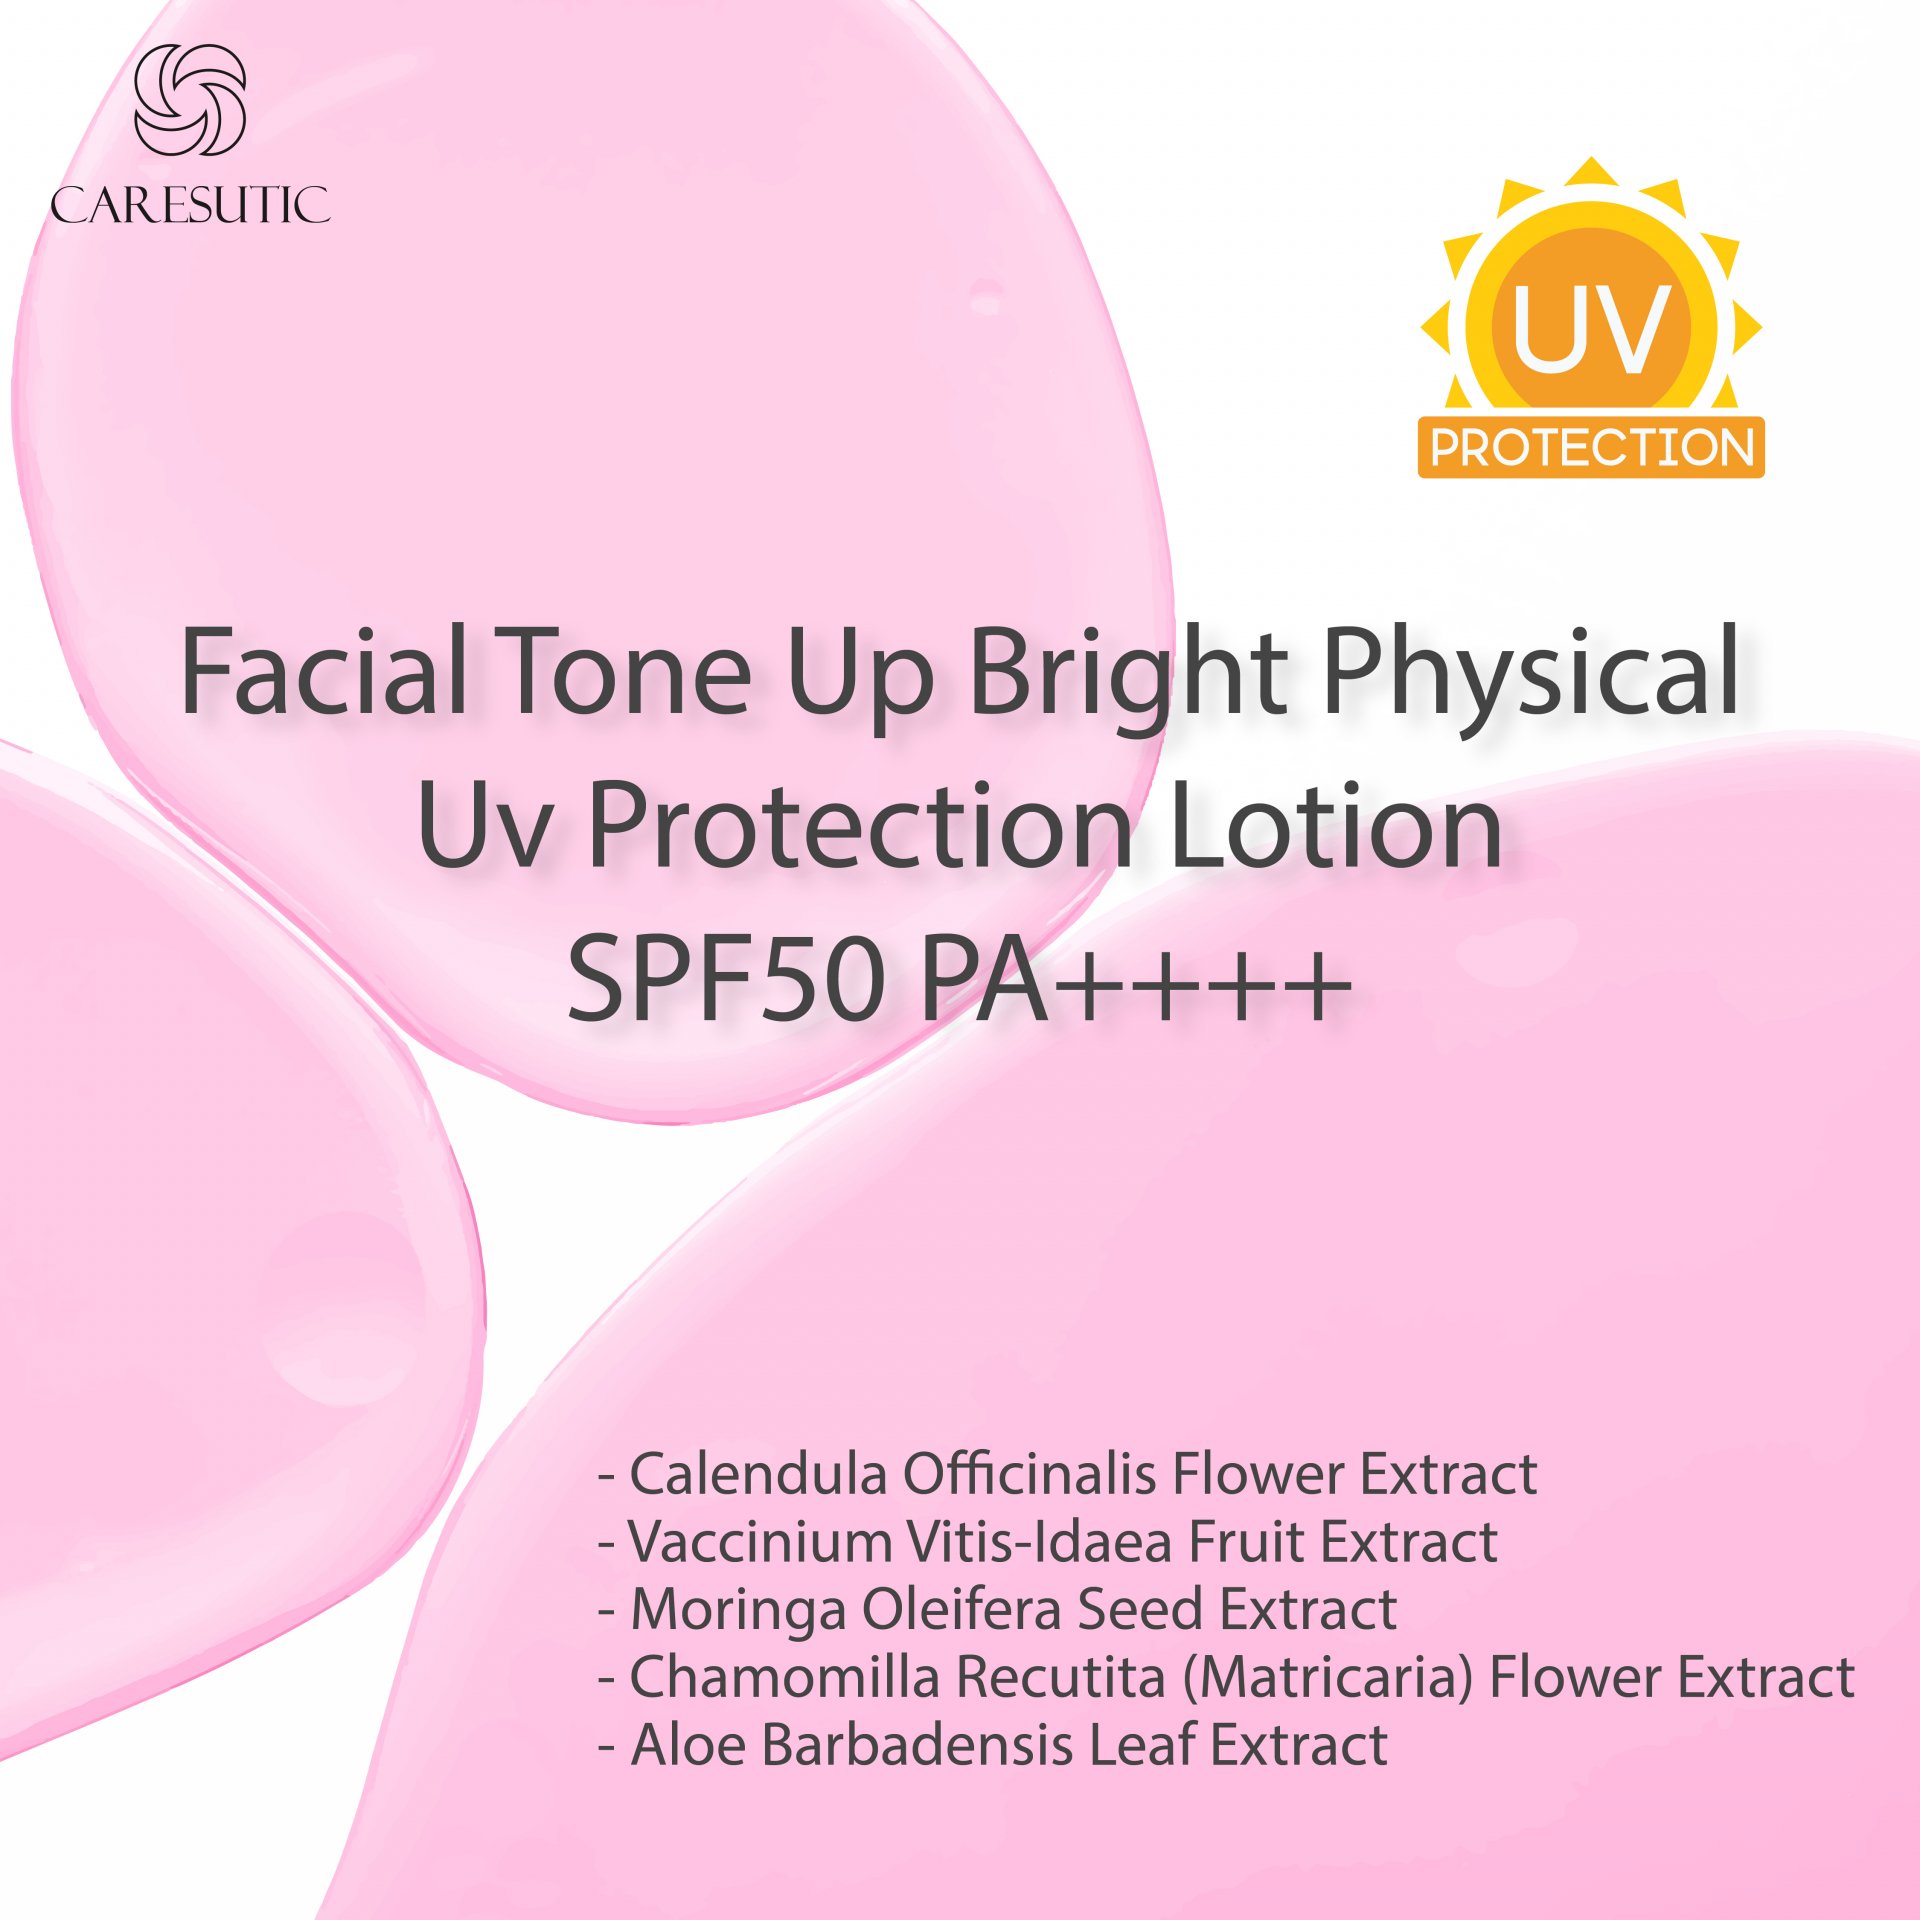 Facial Tone Up Bright Physical Uv Protection Lotion SPF50 PA++++